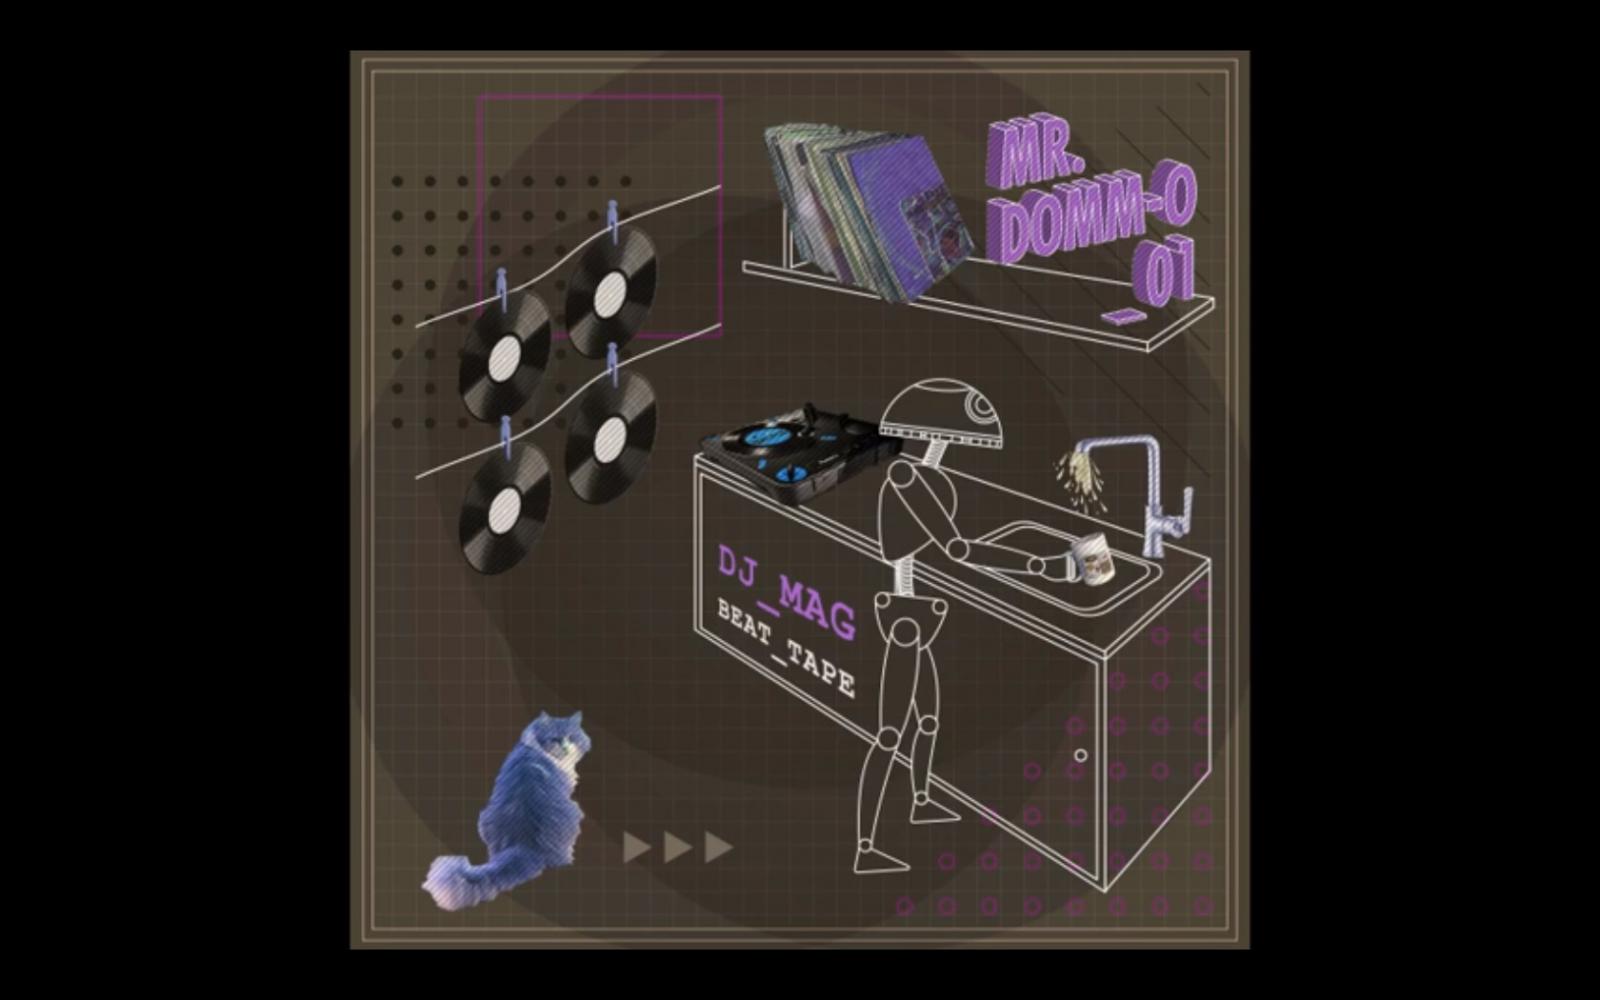 Dj Mag- Mr. Domm-o_01 Beat Tape 2020 (Full Album)